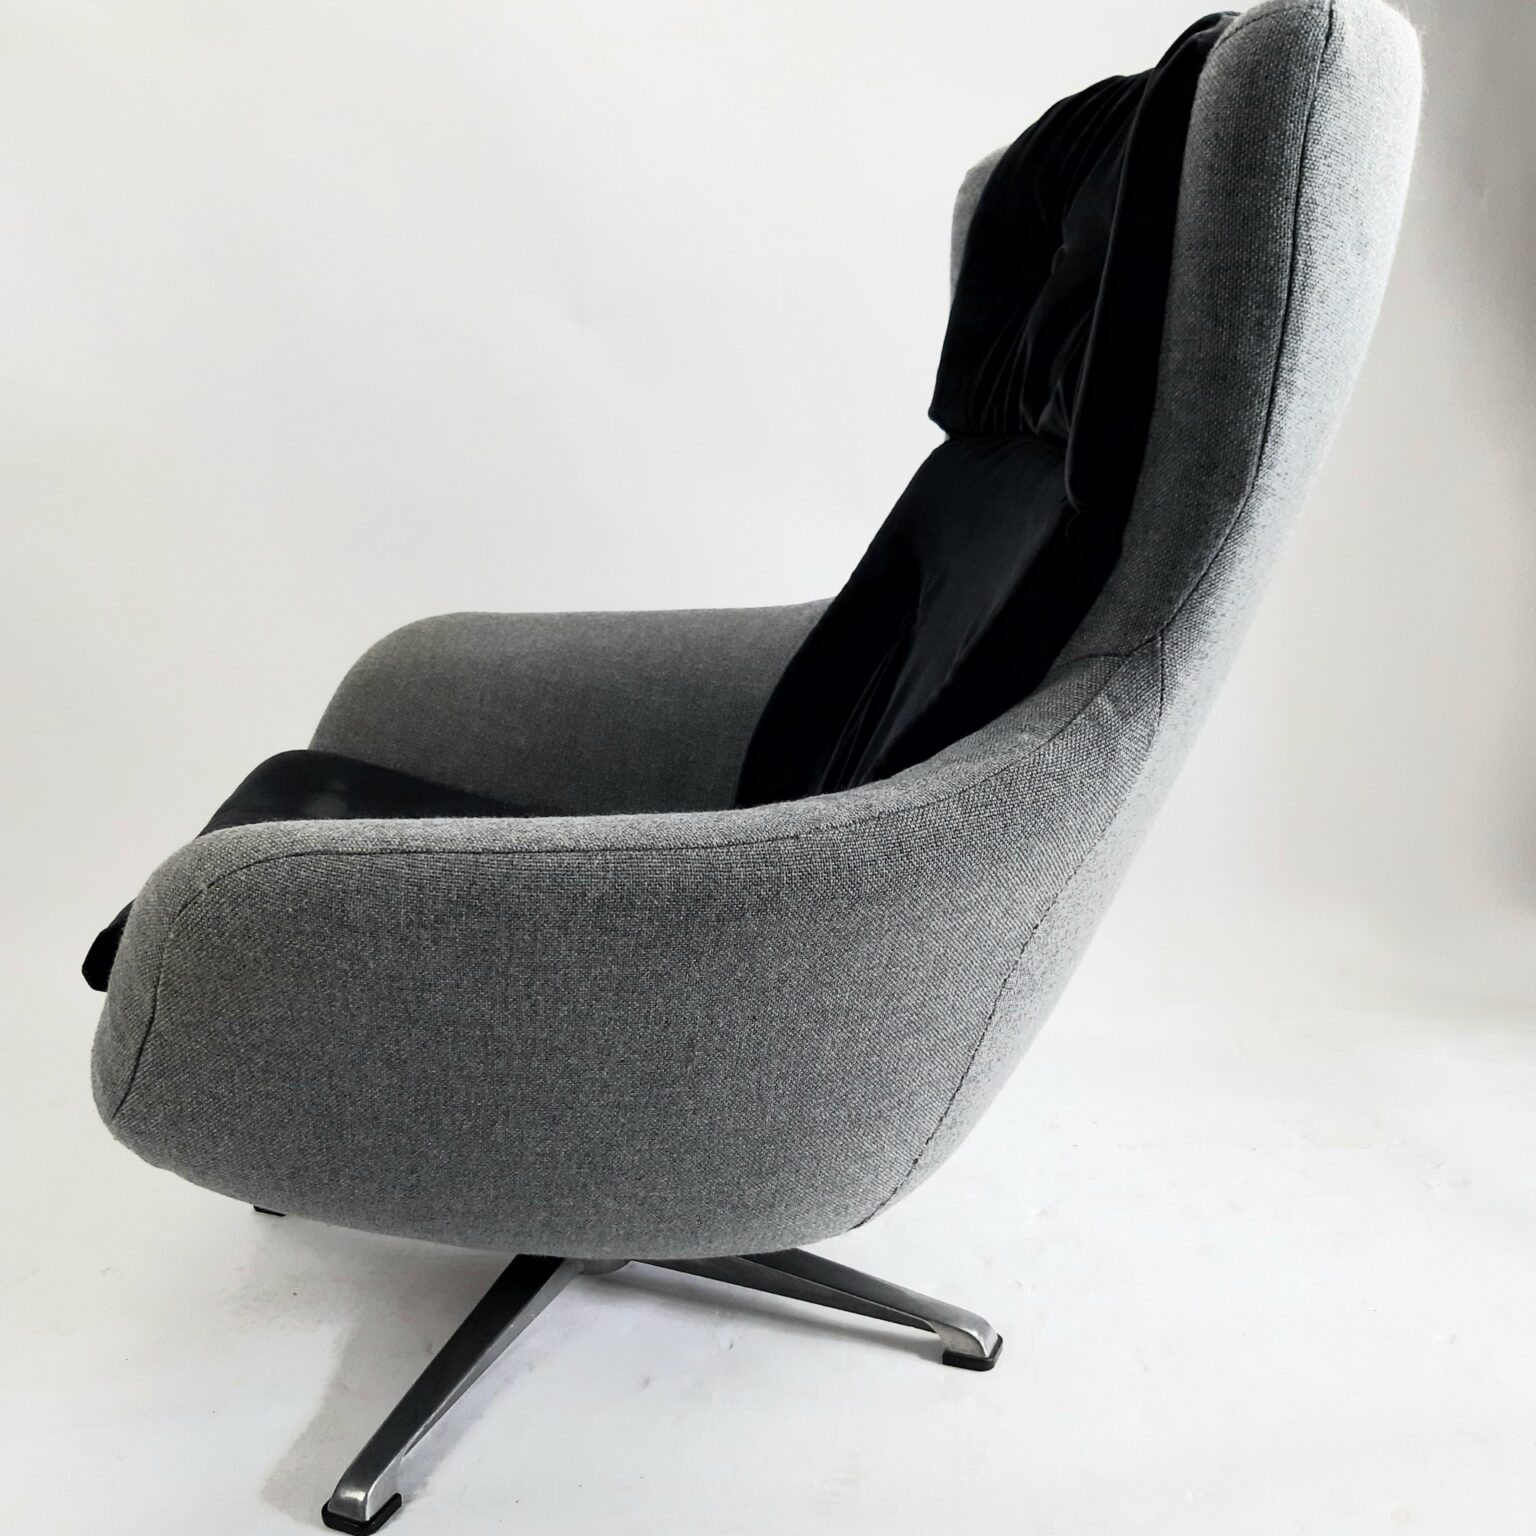 Overman fauteuil grey